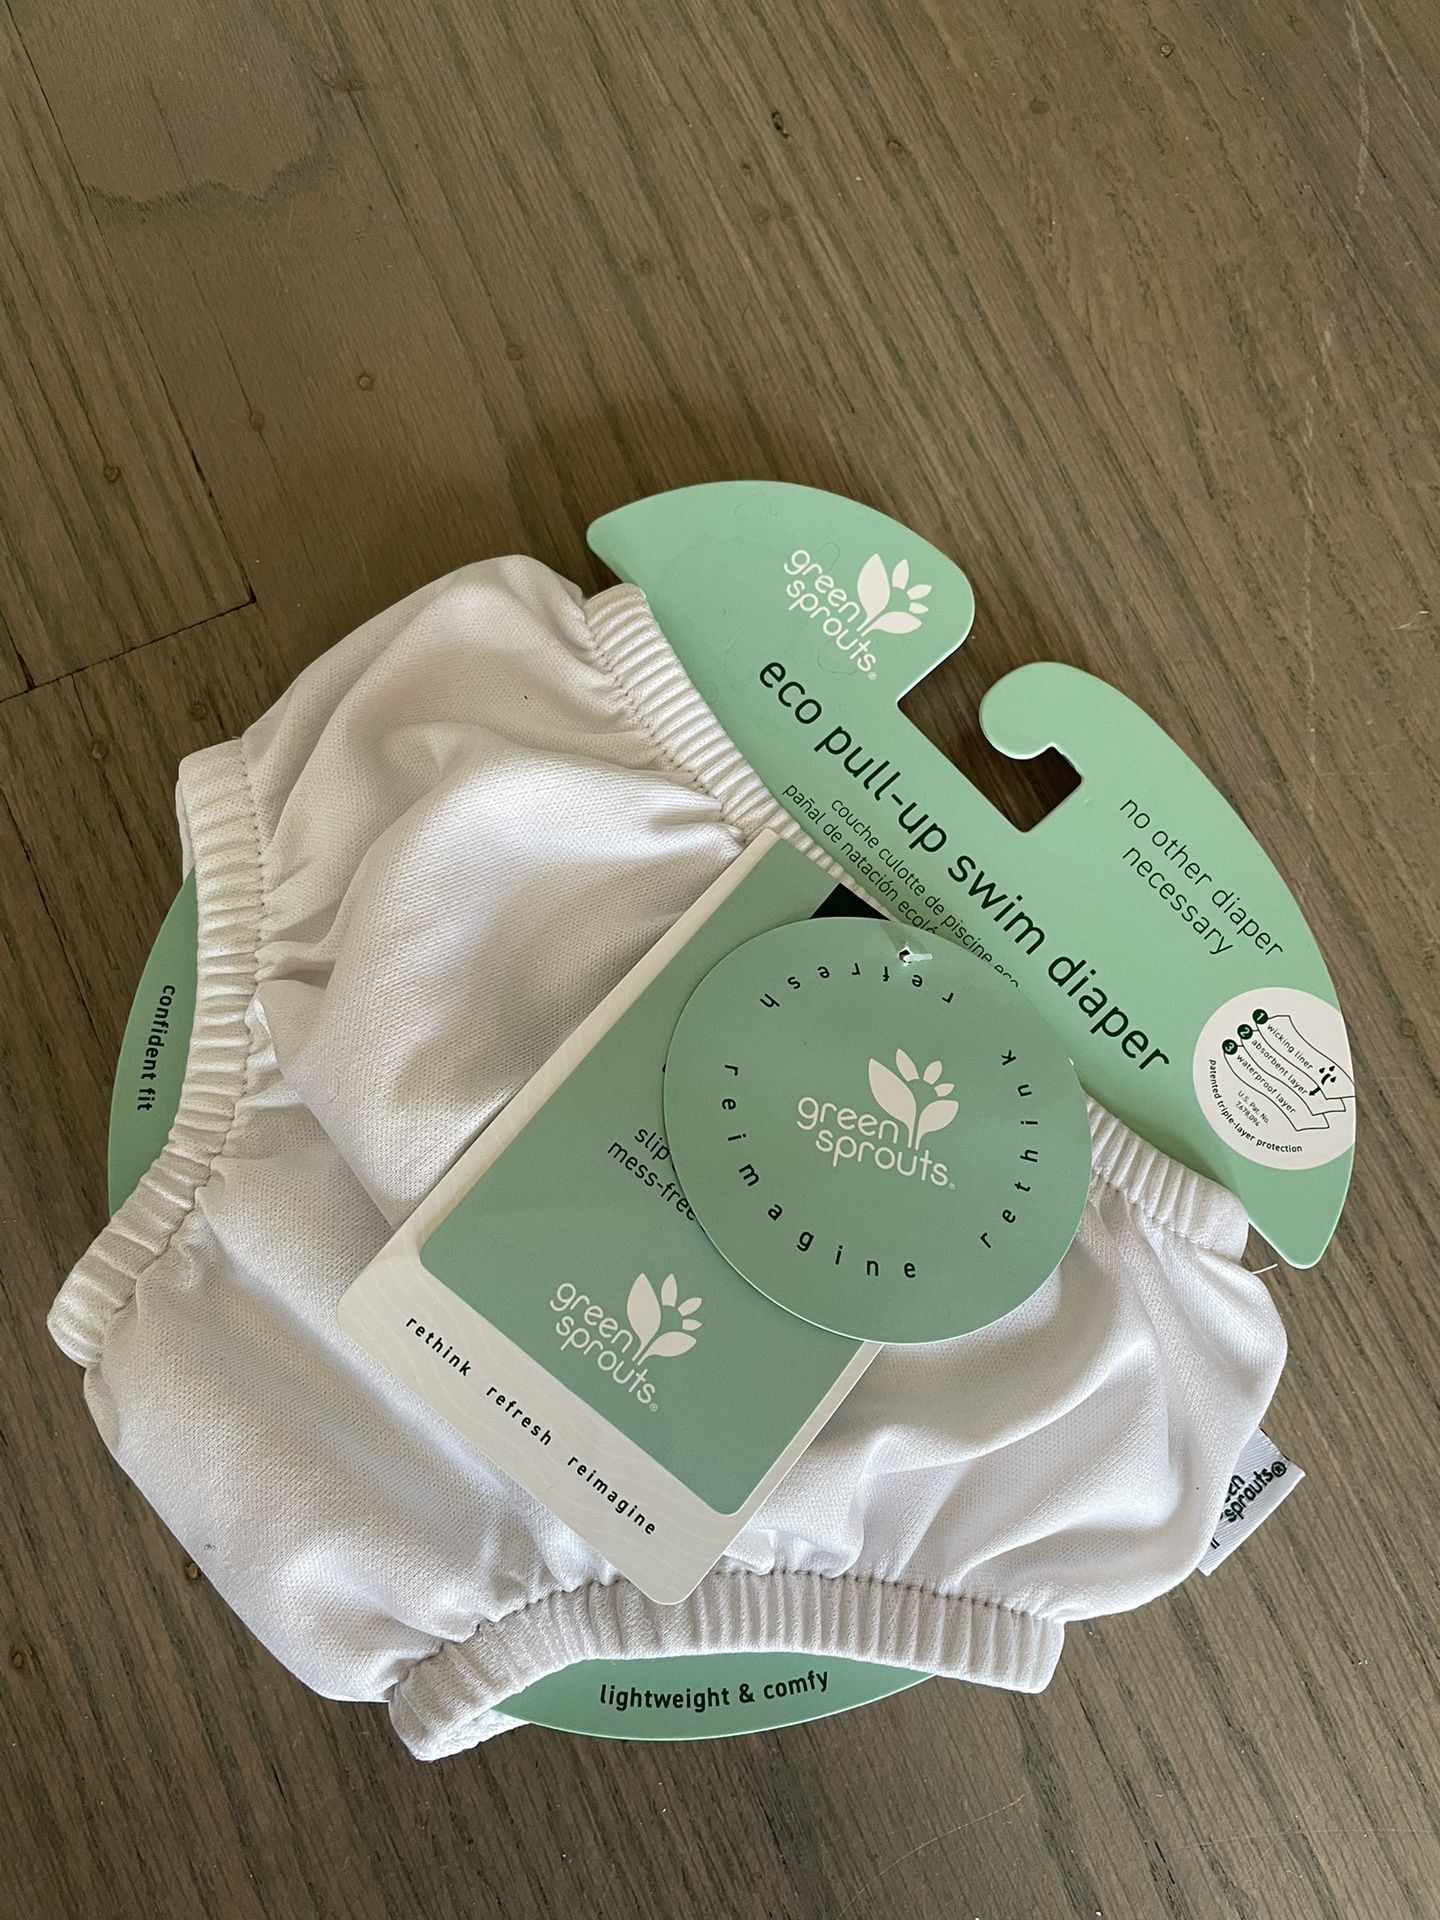 Baby Reusable Swim Diaper 0-6 Months